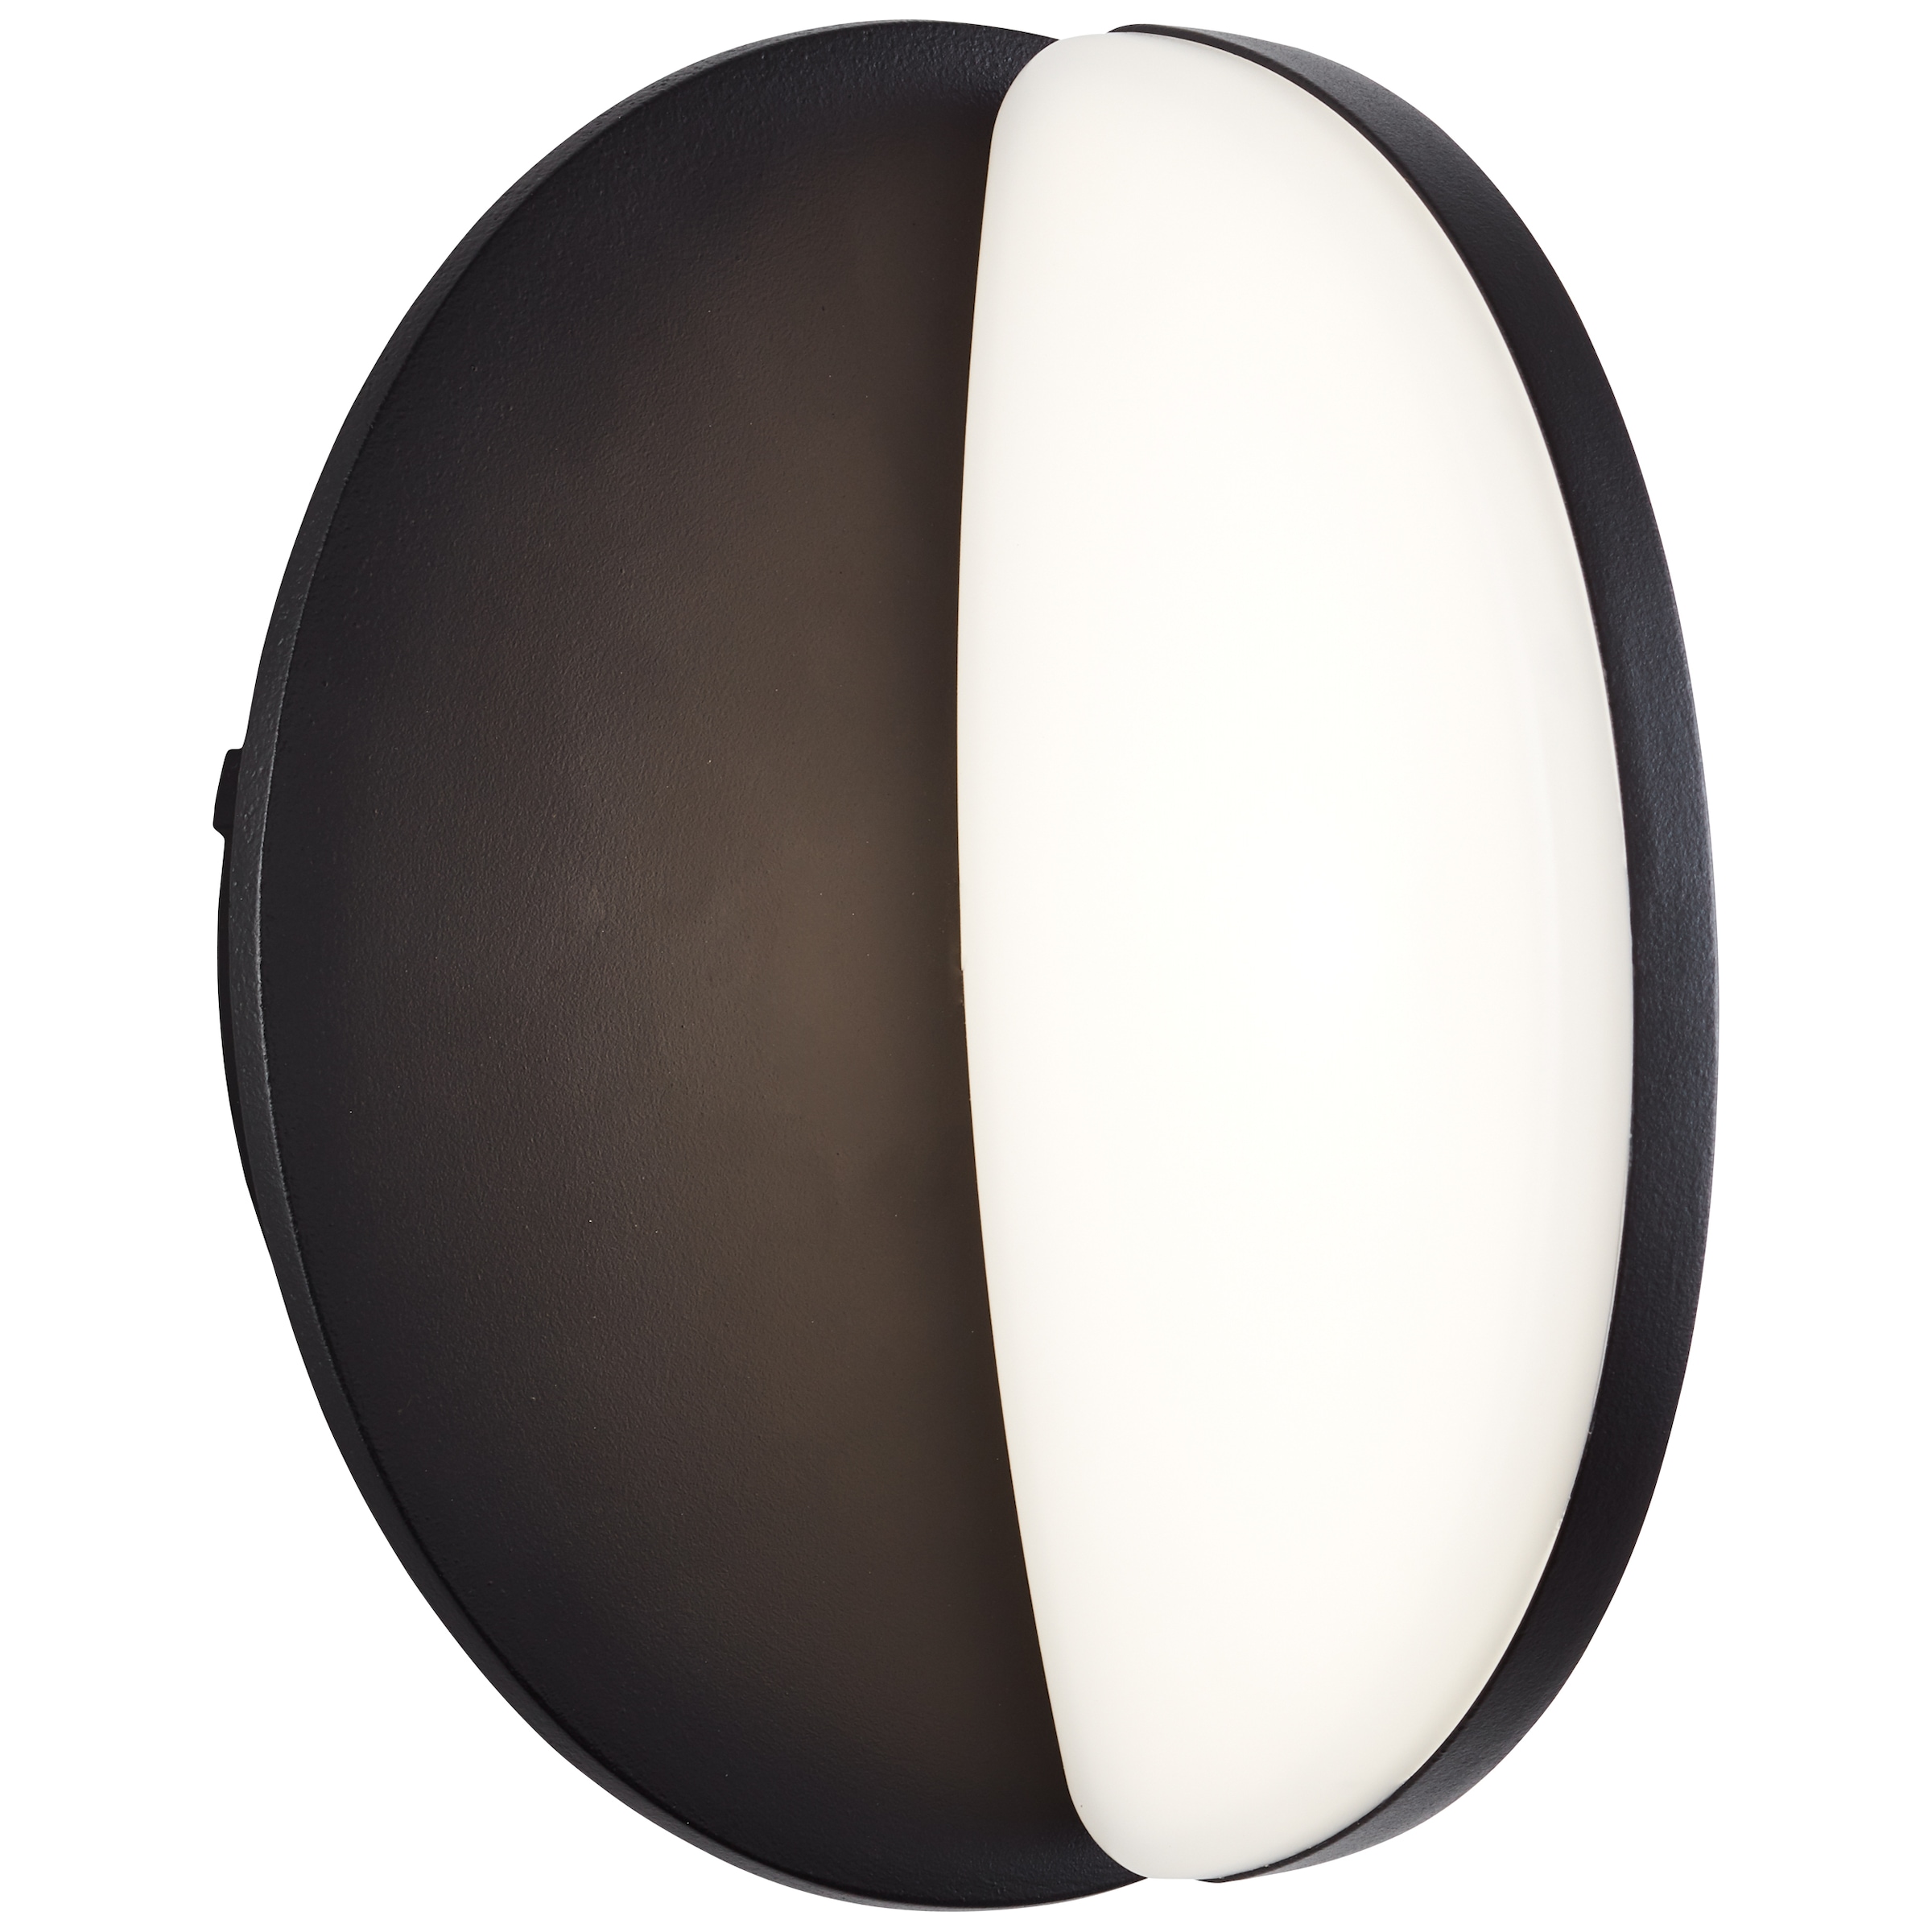 Brilliant LED Wandleuchte »Soare«, 2000 lm, Ø 18,5 cm, Metall/Kunststoff, schwarz/weiß